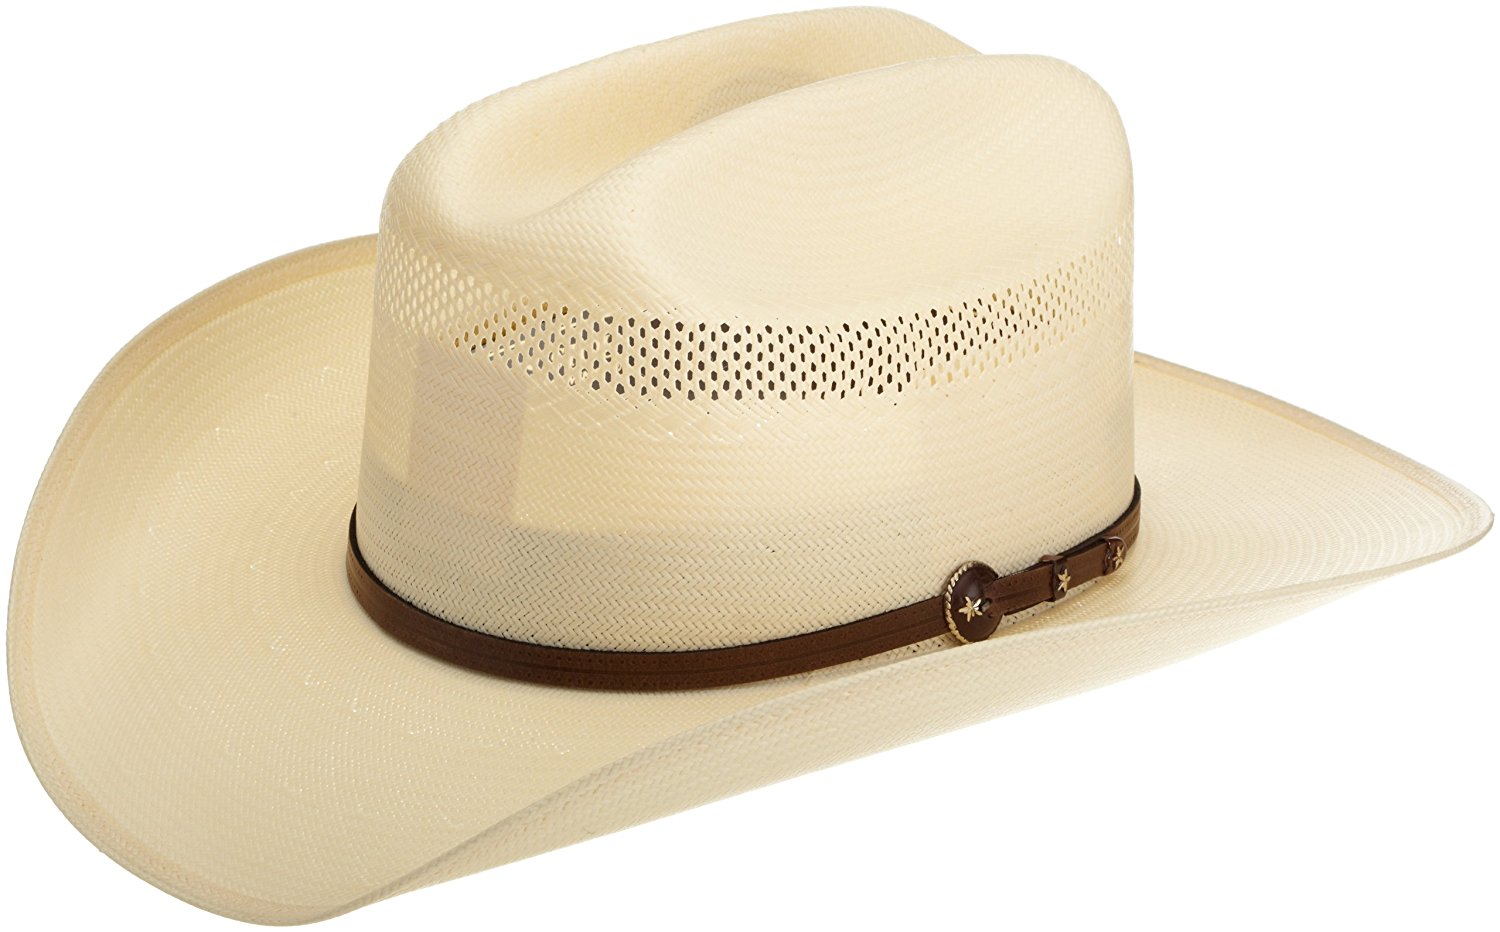 Cowboy hat stylish man. Cap clipart easter